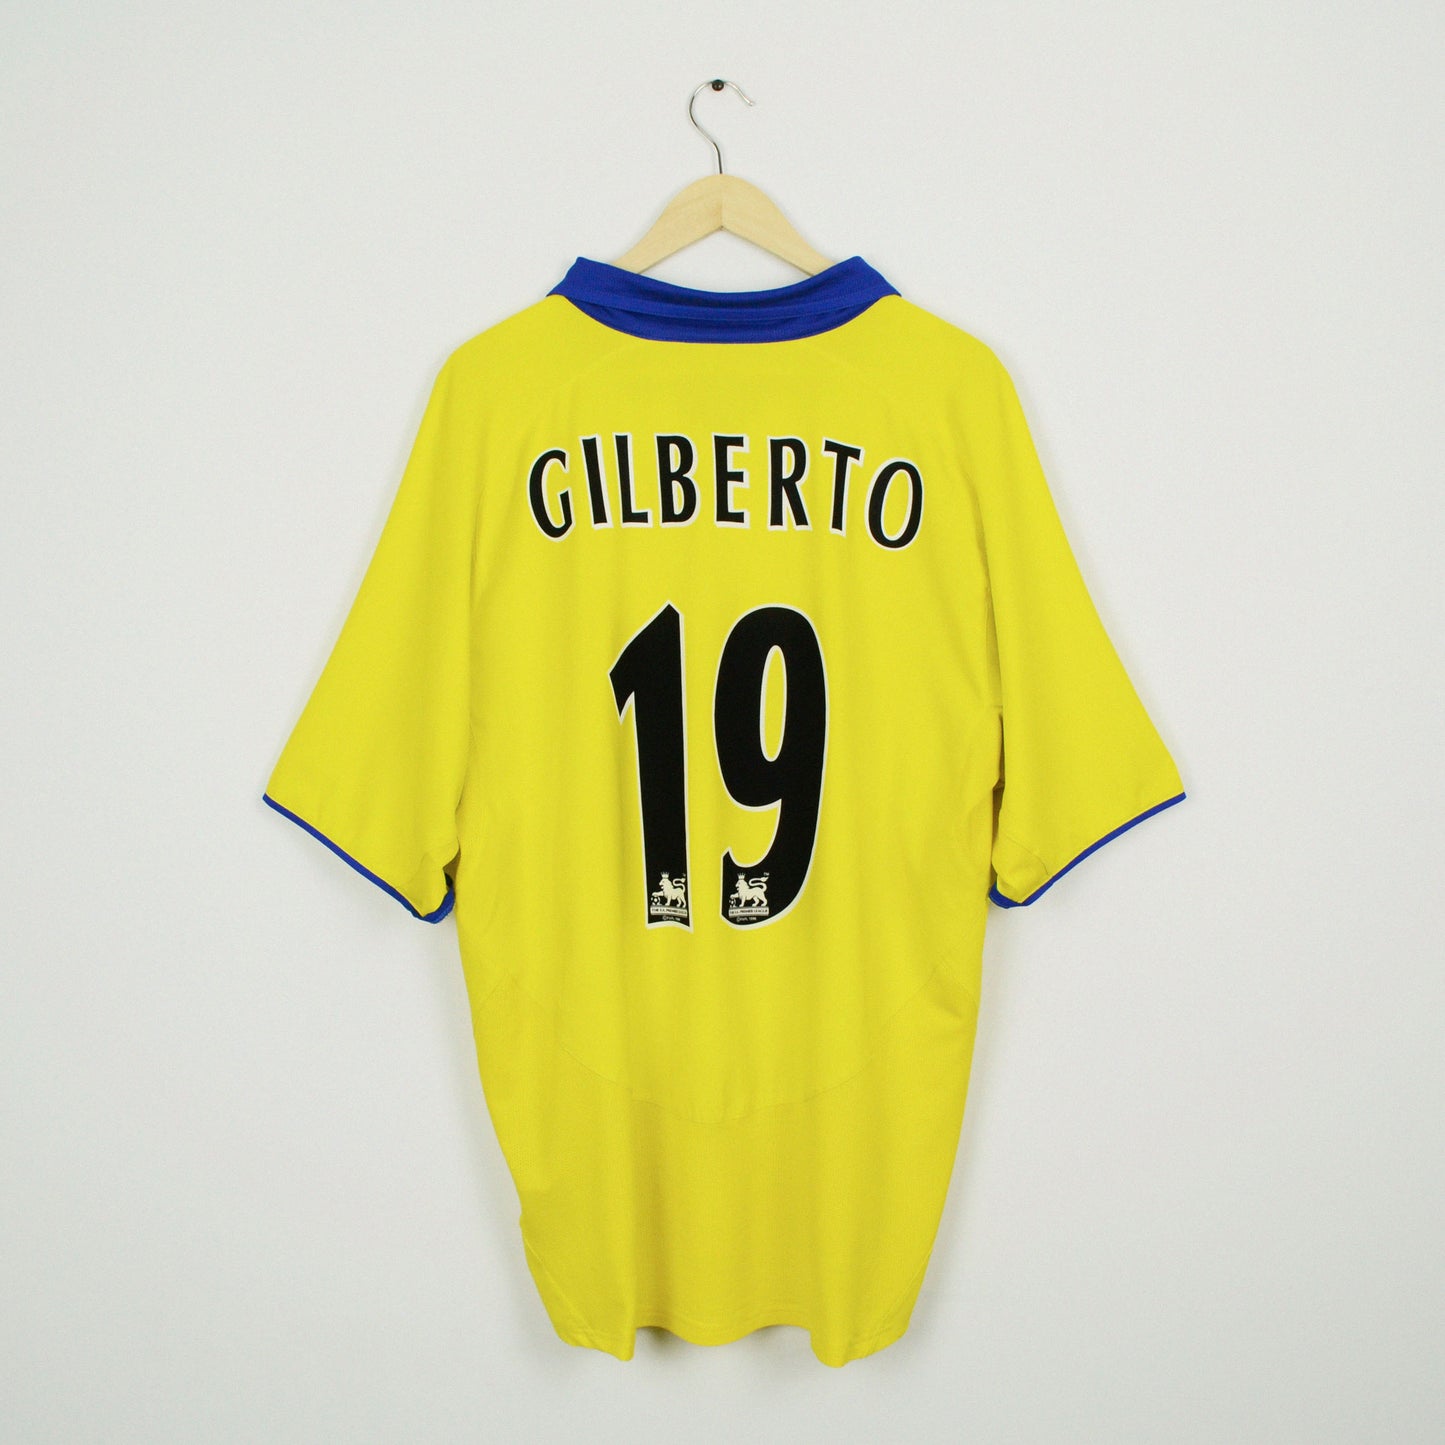 2003-04 Nike Arsenal Away Shirt 'Gilberto 19' XL